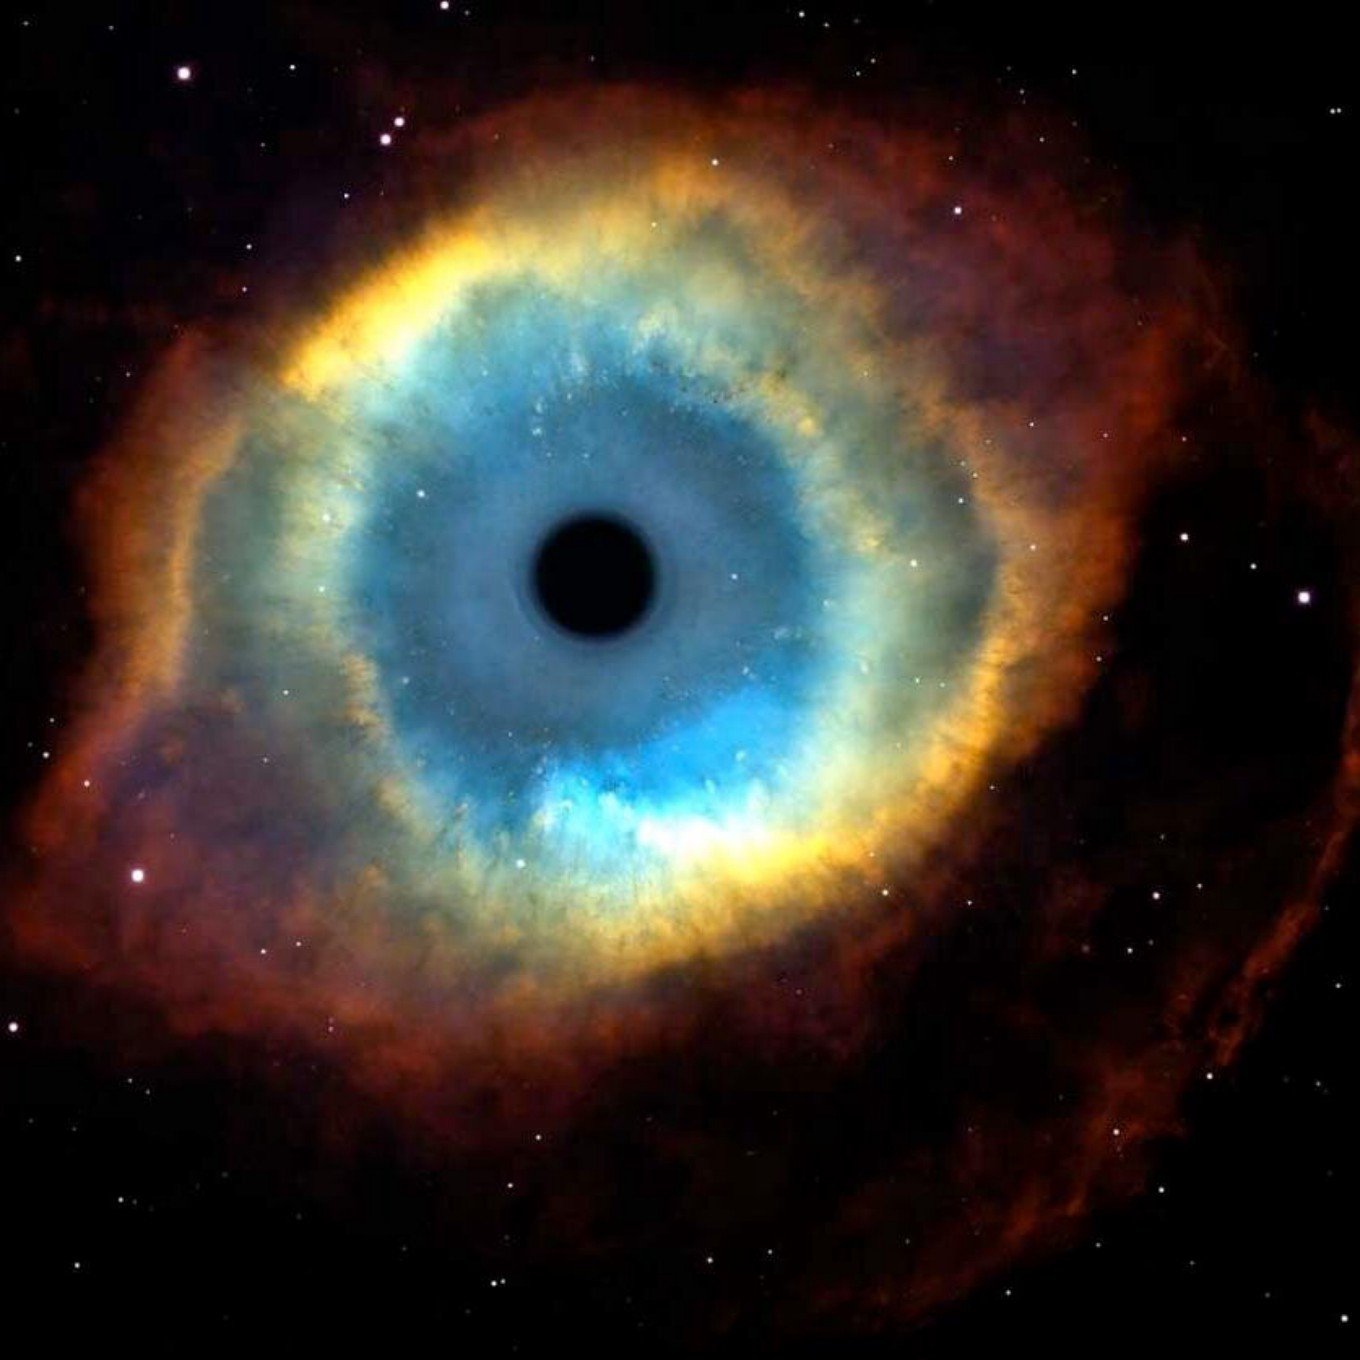 Ссылка на глаз бога. Планетарная туманность кошачий глаз. Планетарная туманность NGC 6543 ("кошачий глаз"). Галактика кошачий глаз. Кошачий глаз Небула.